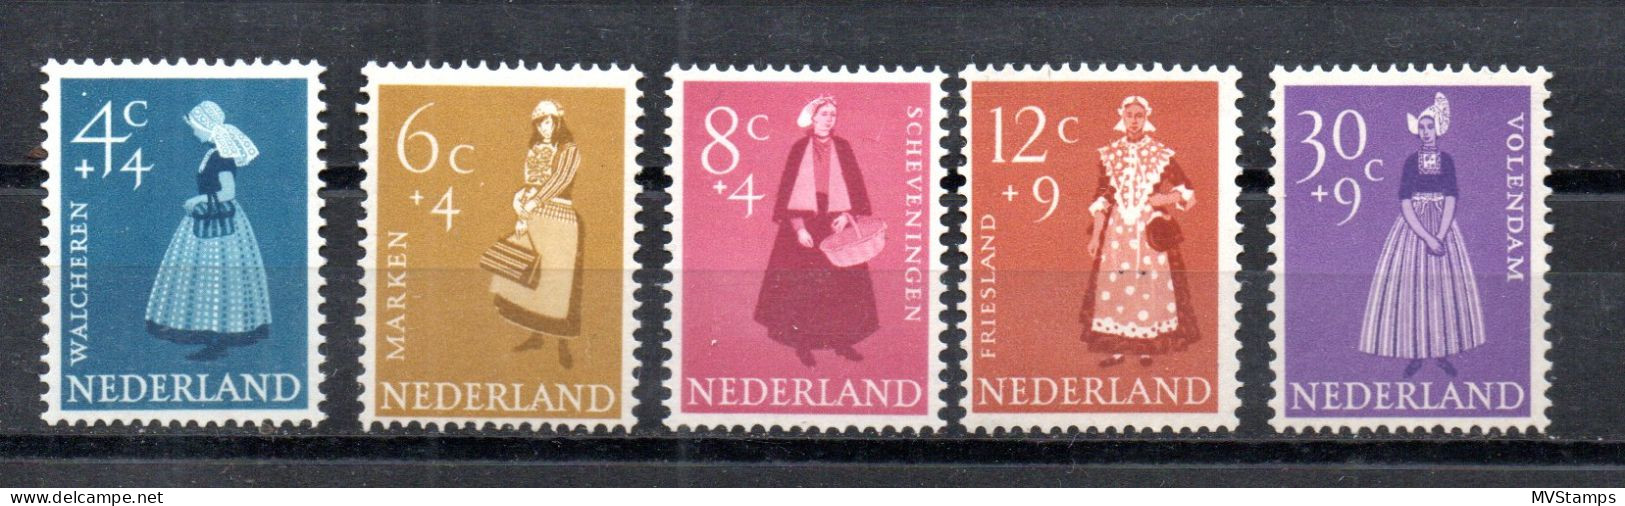 Netherlands 1958 Set Costumes/Trachten Stamps (Michel 712/16) MNH - Neufs